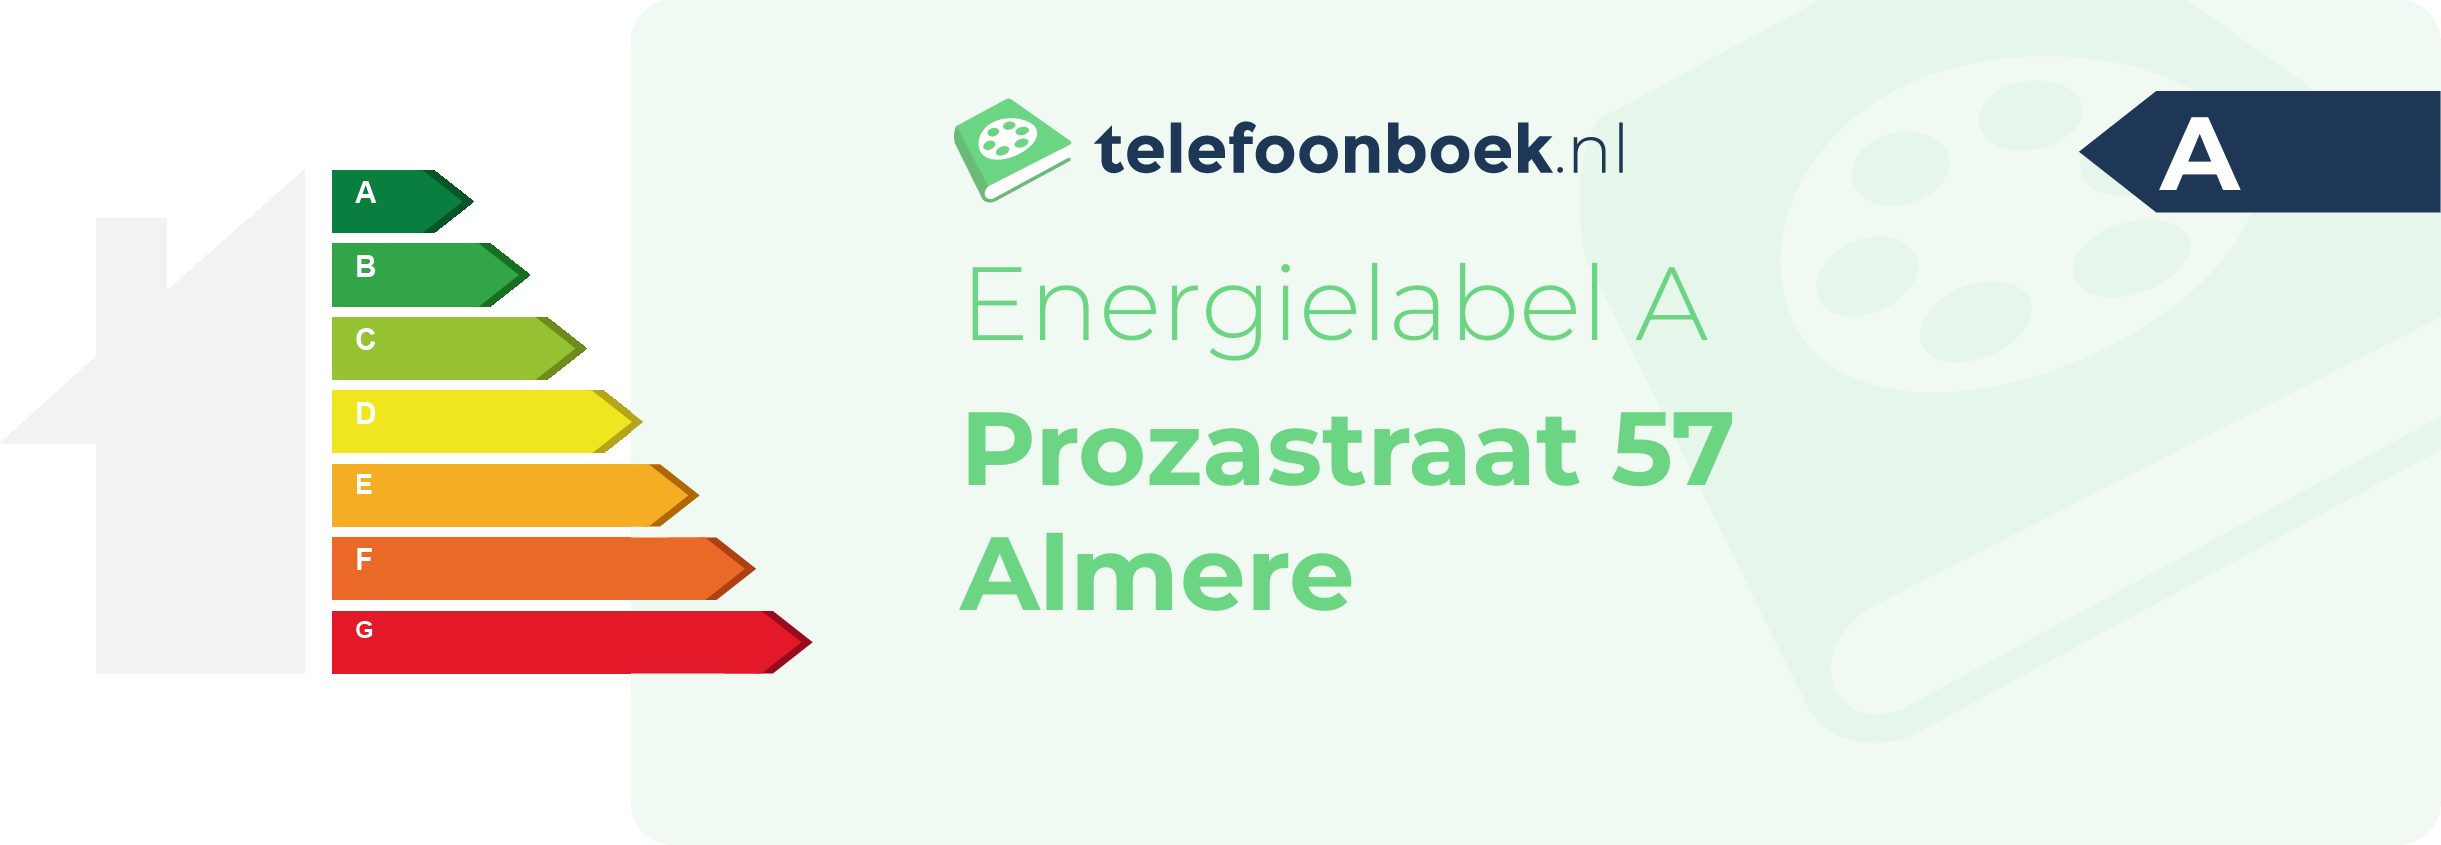 Energielabel Prozastraat 57 Almere